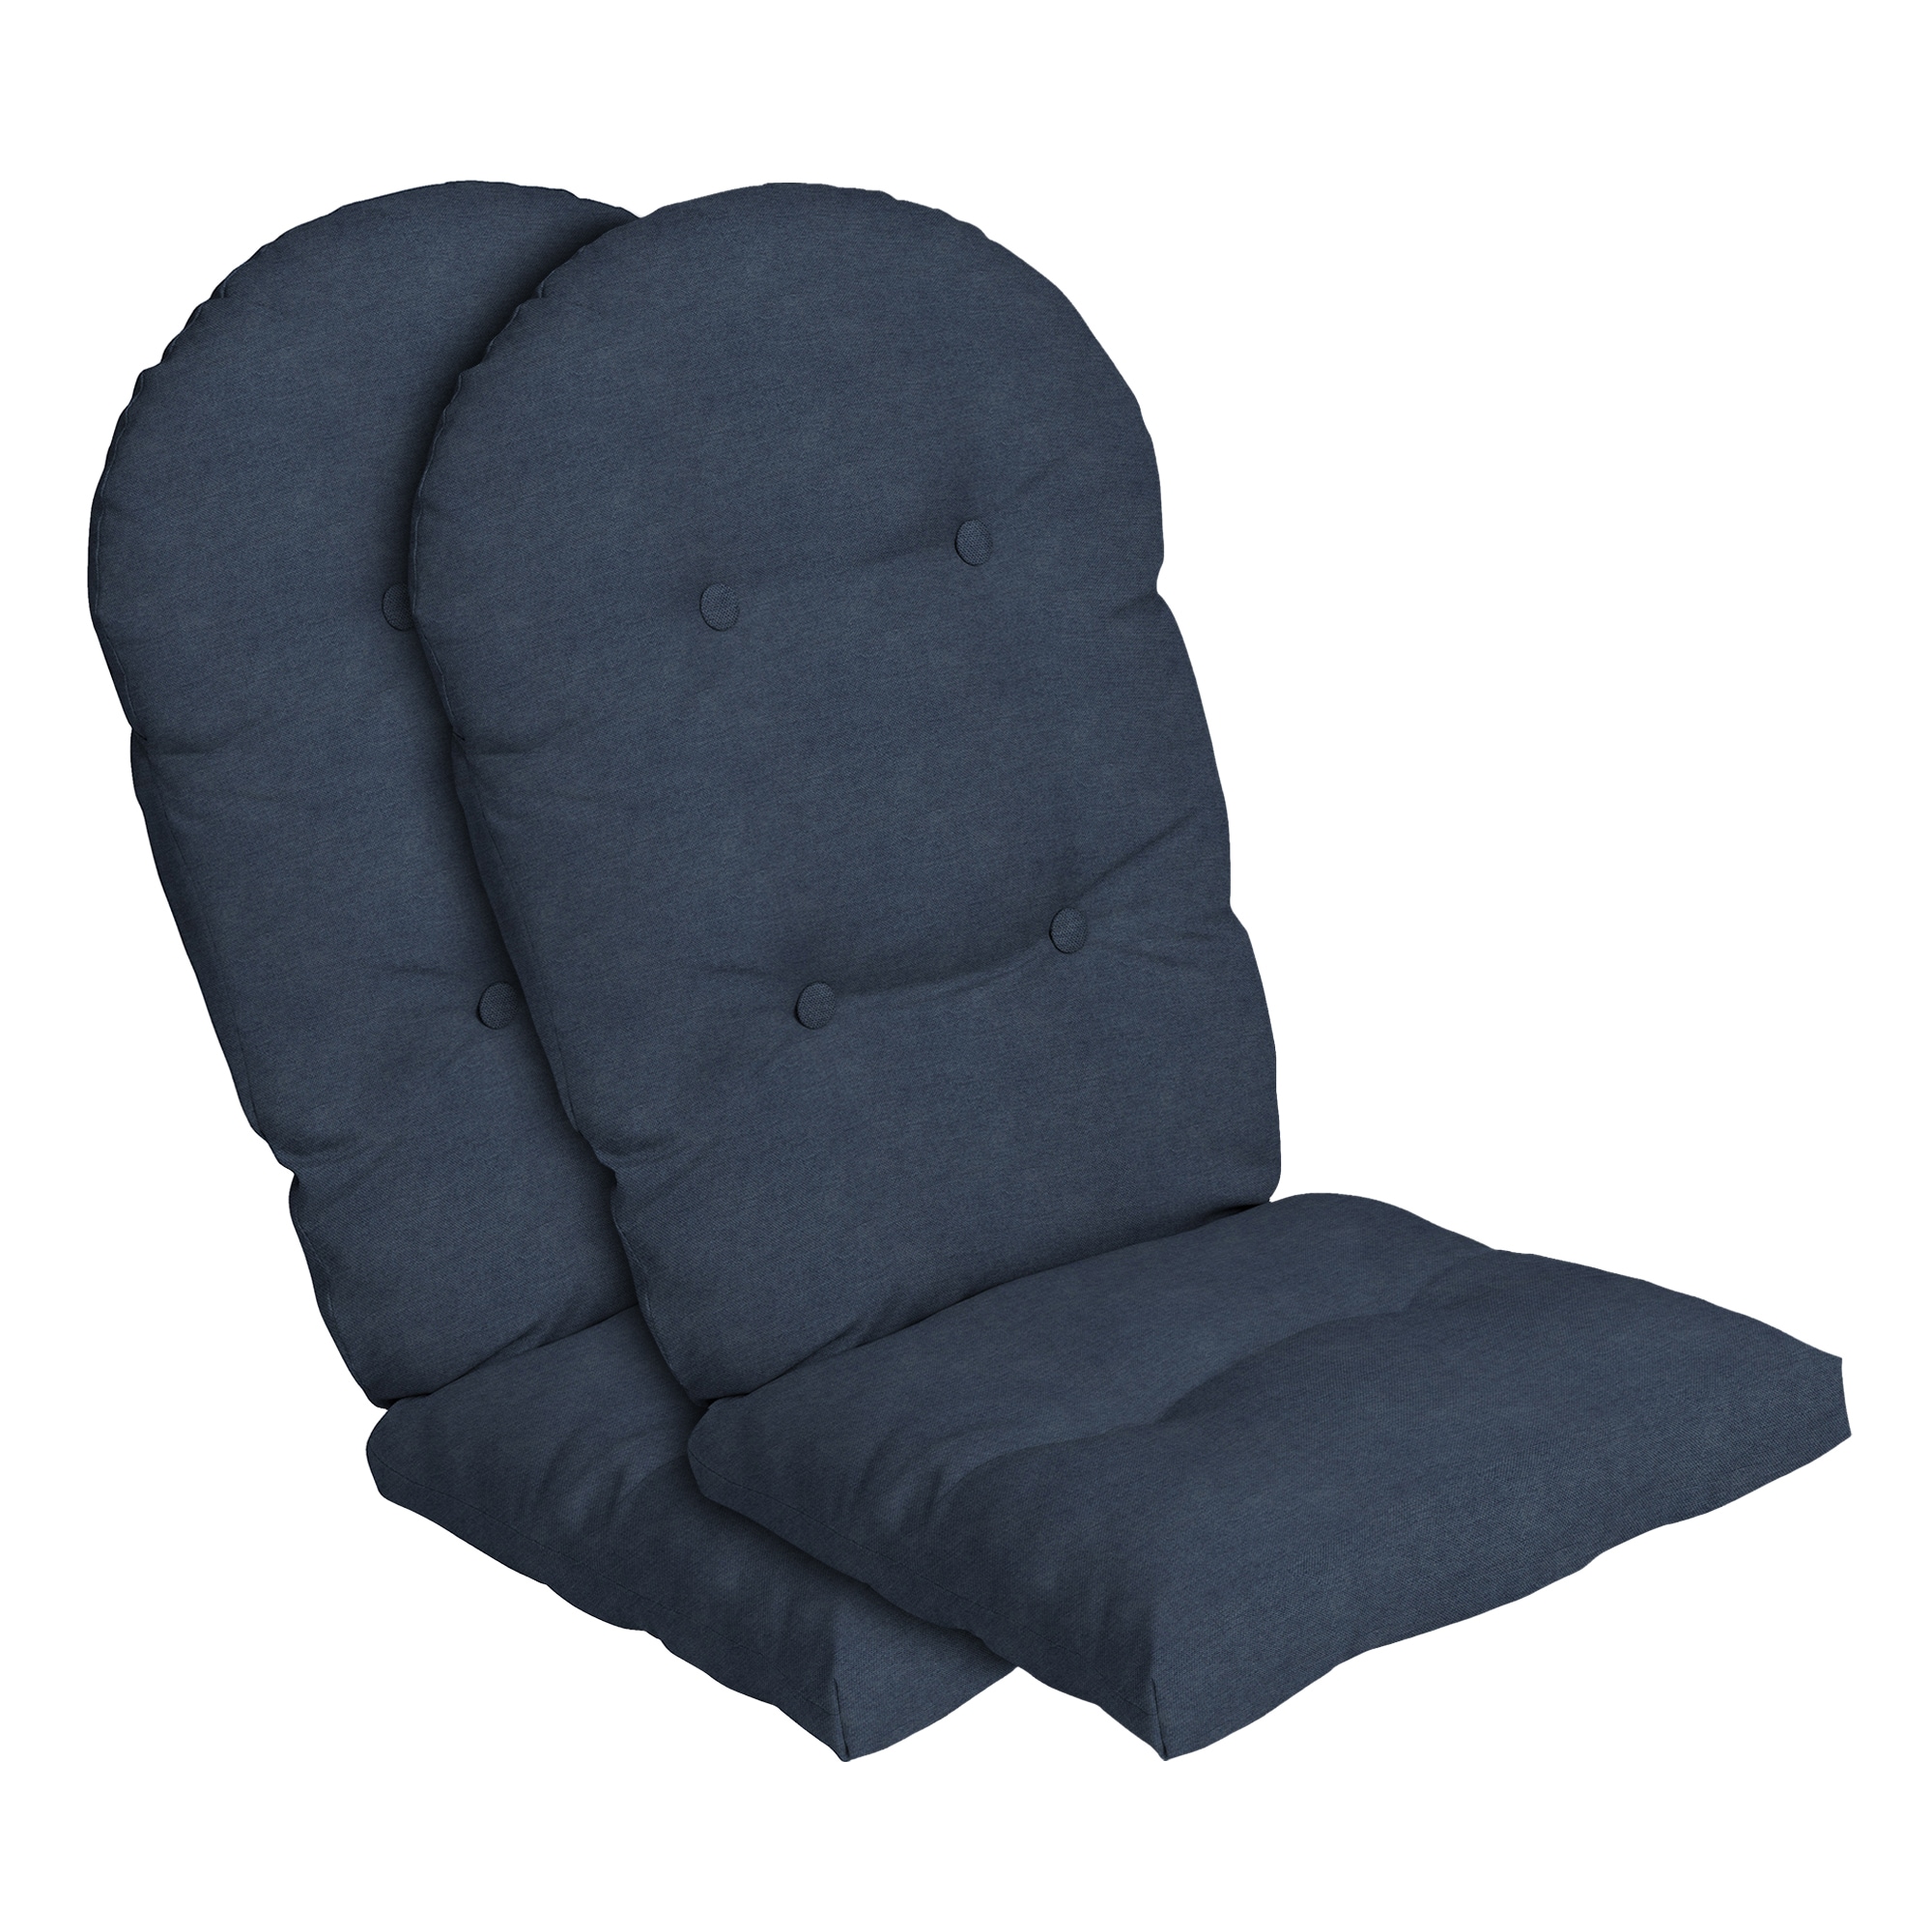 Cushy Tushy Premium Seat Cushion (Black/Light Gray)